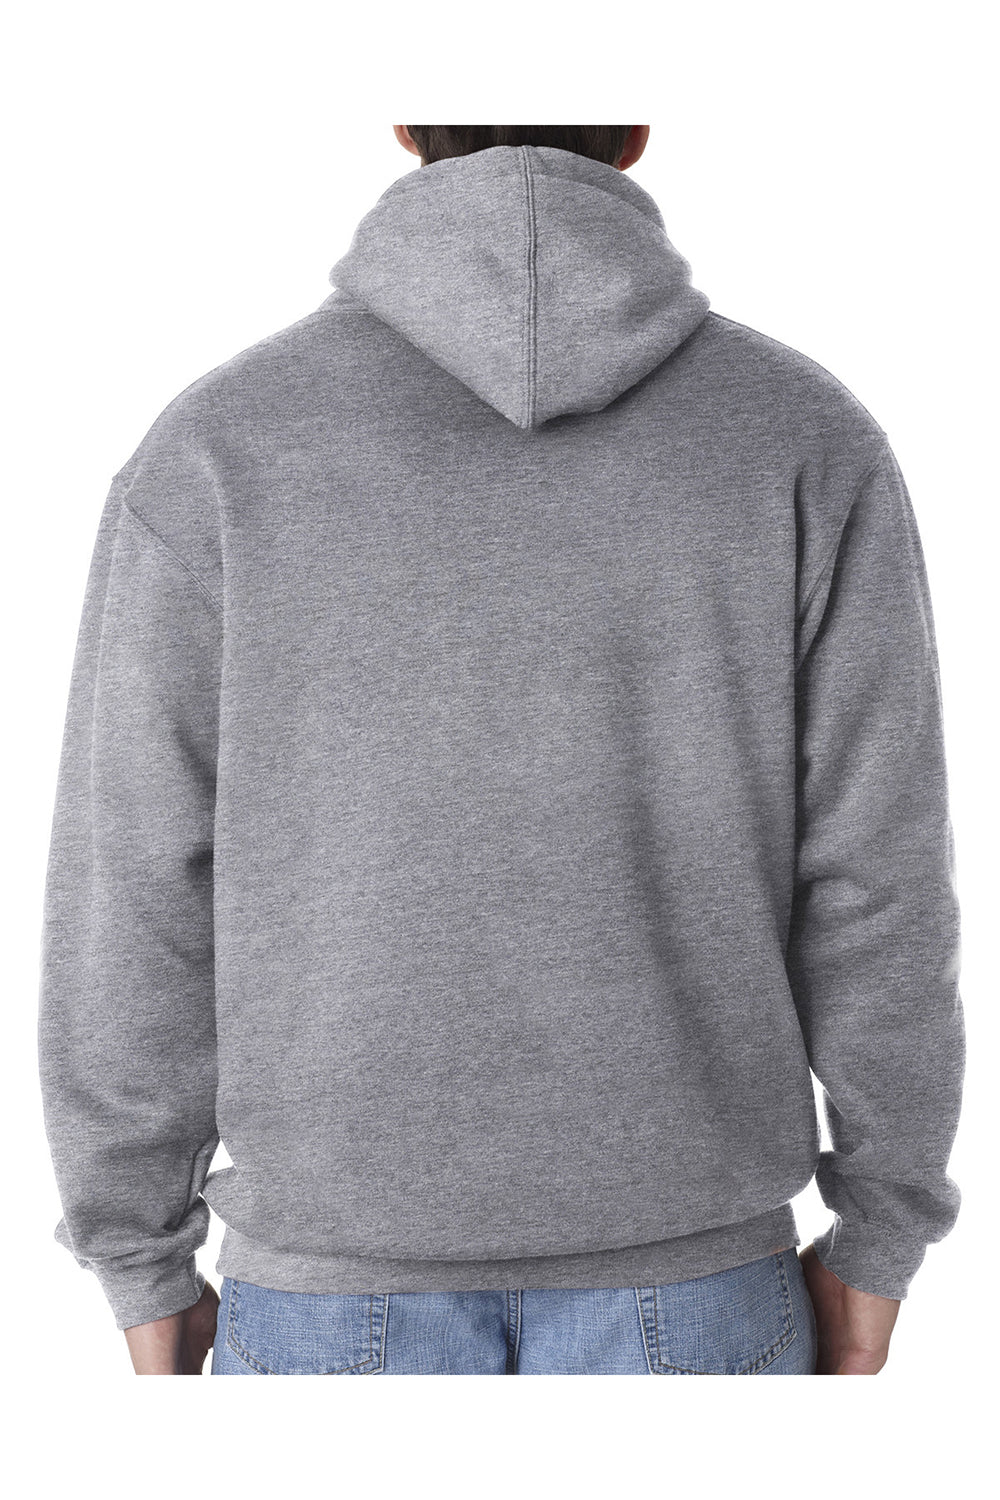 Bayside BA960 Mens USA Made Hooded Sweatshirt Hoodie Dark Ash Grey Model Back